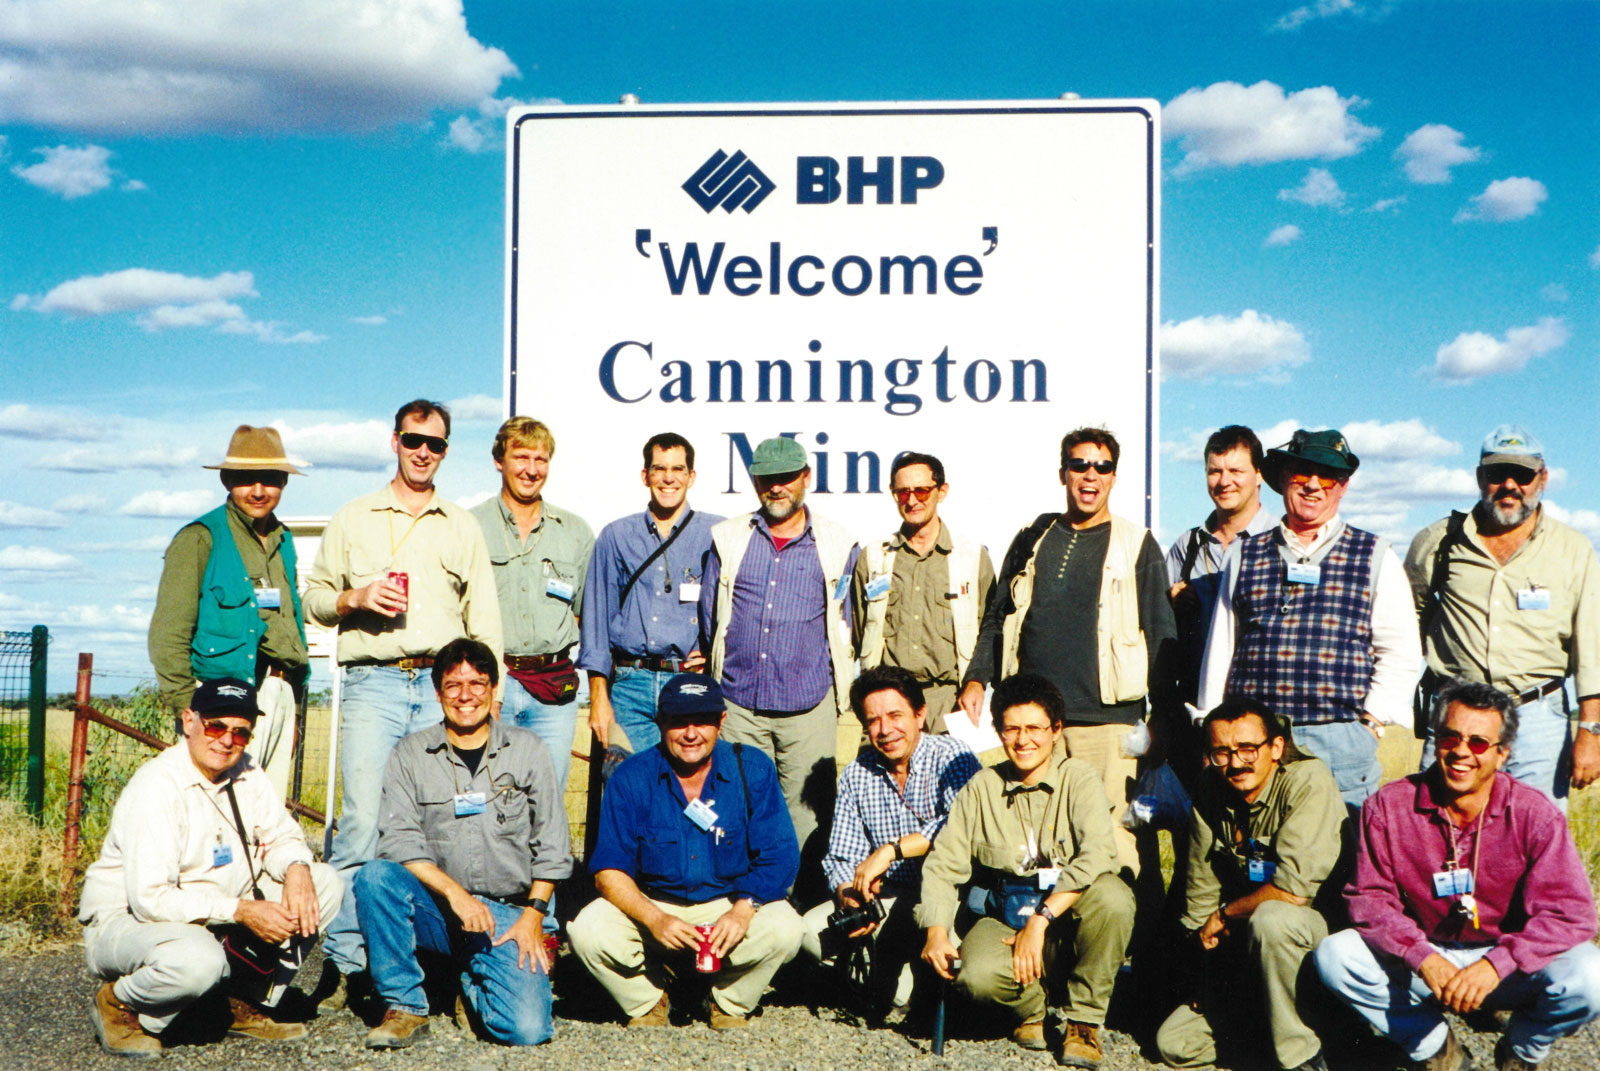 BHP's Cannington mine